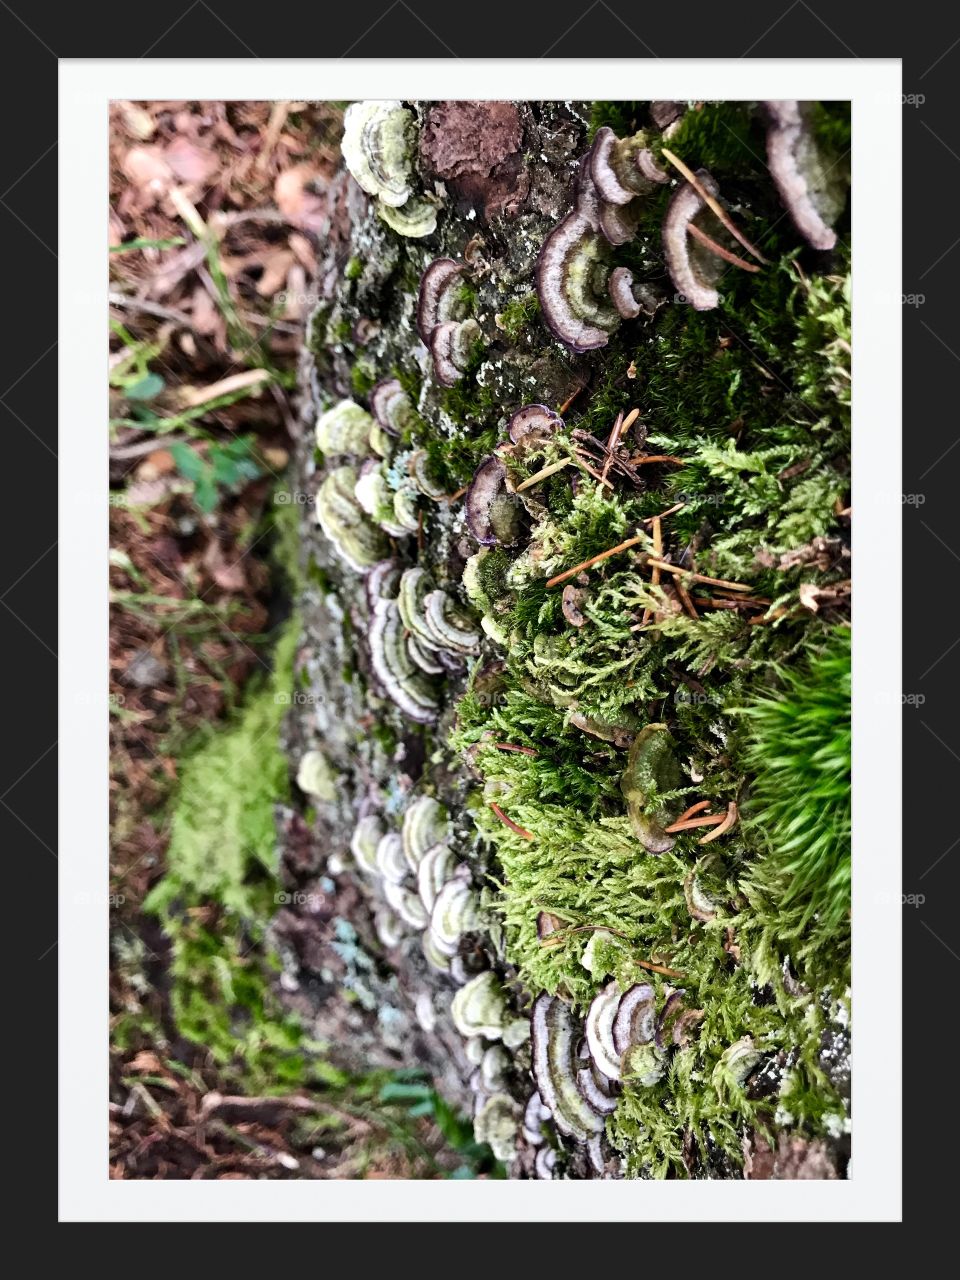 Moss and Mushroom etang des royes 